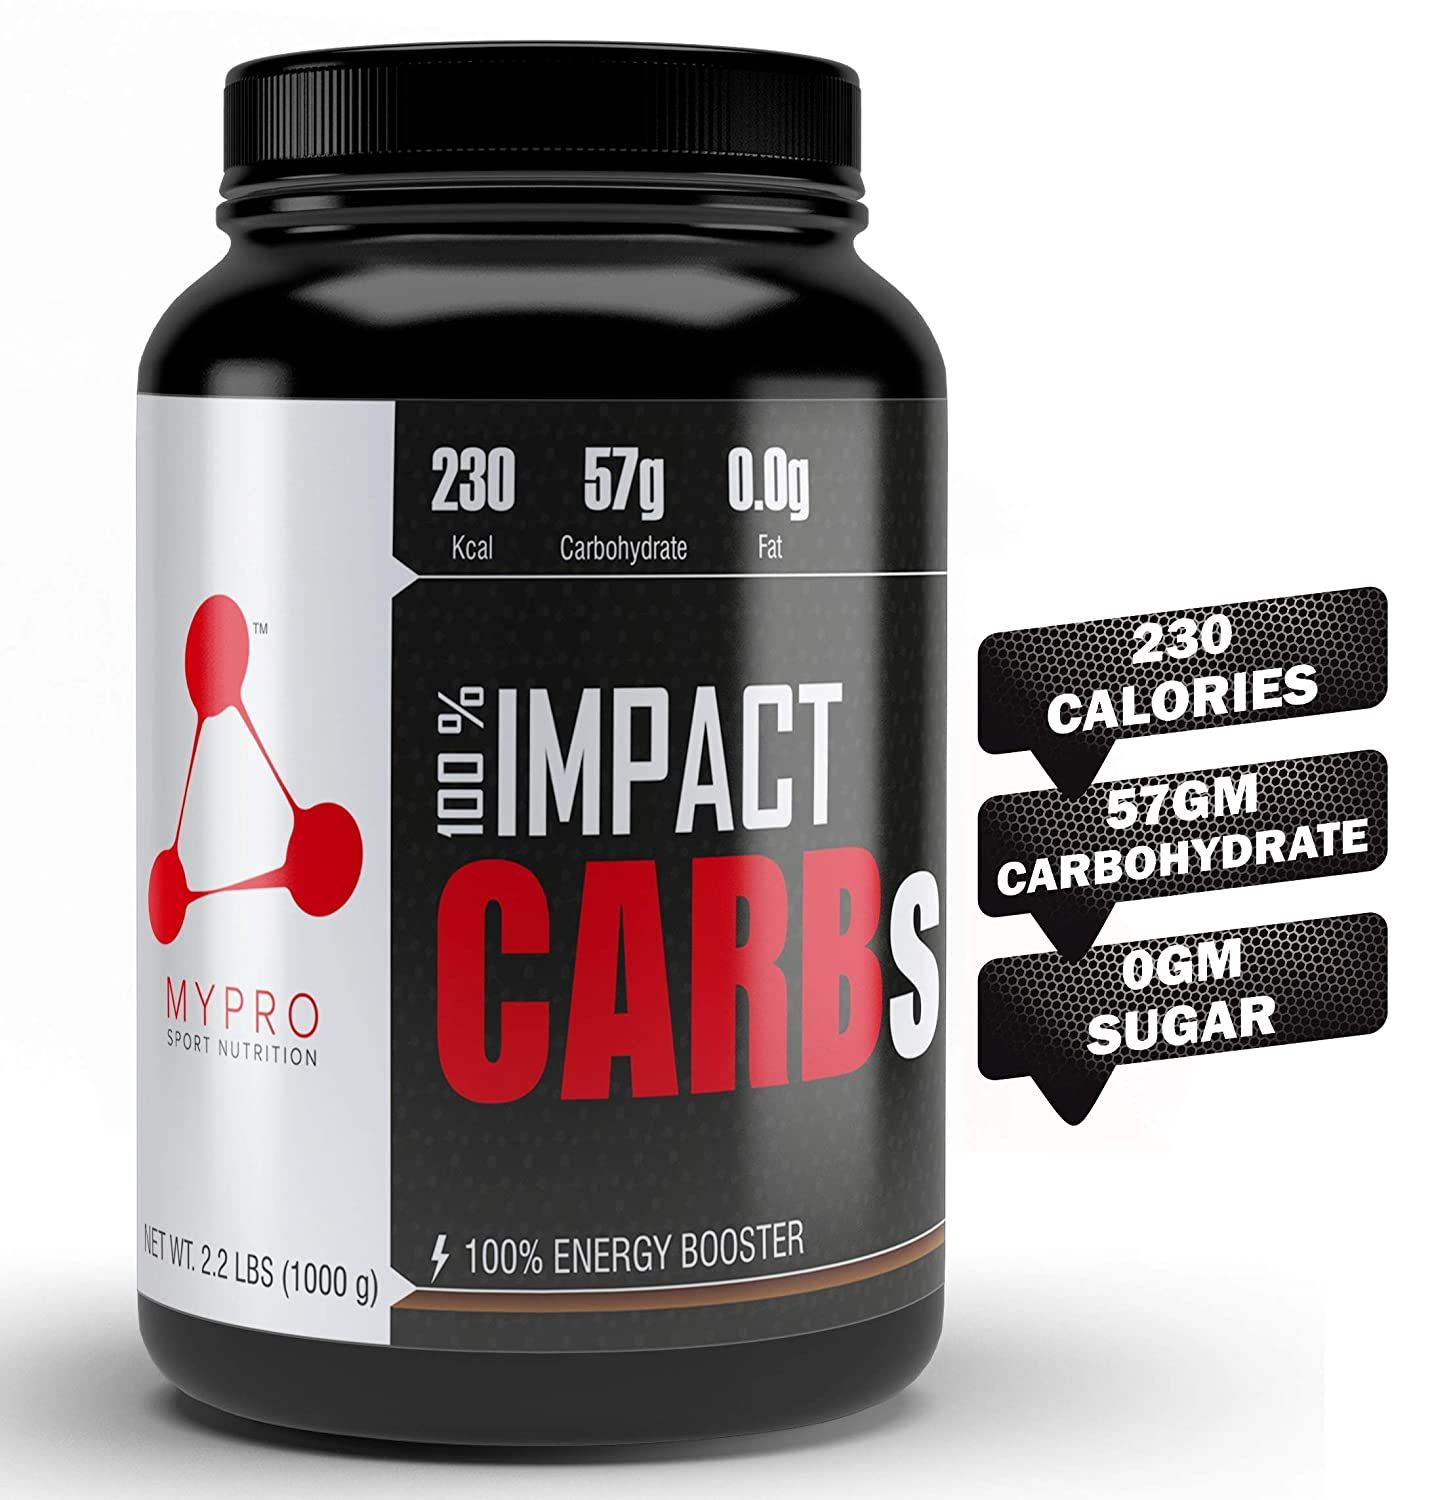 Mypro Sport Nutrition Carb Powder Supplement Image